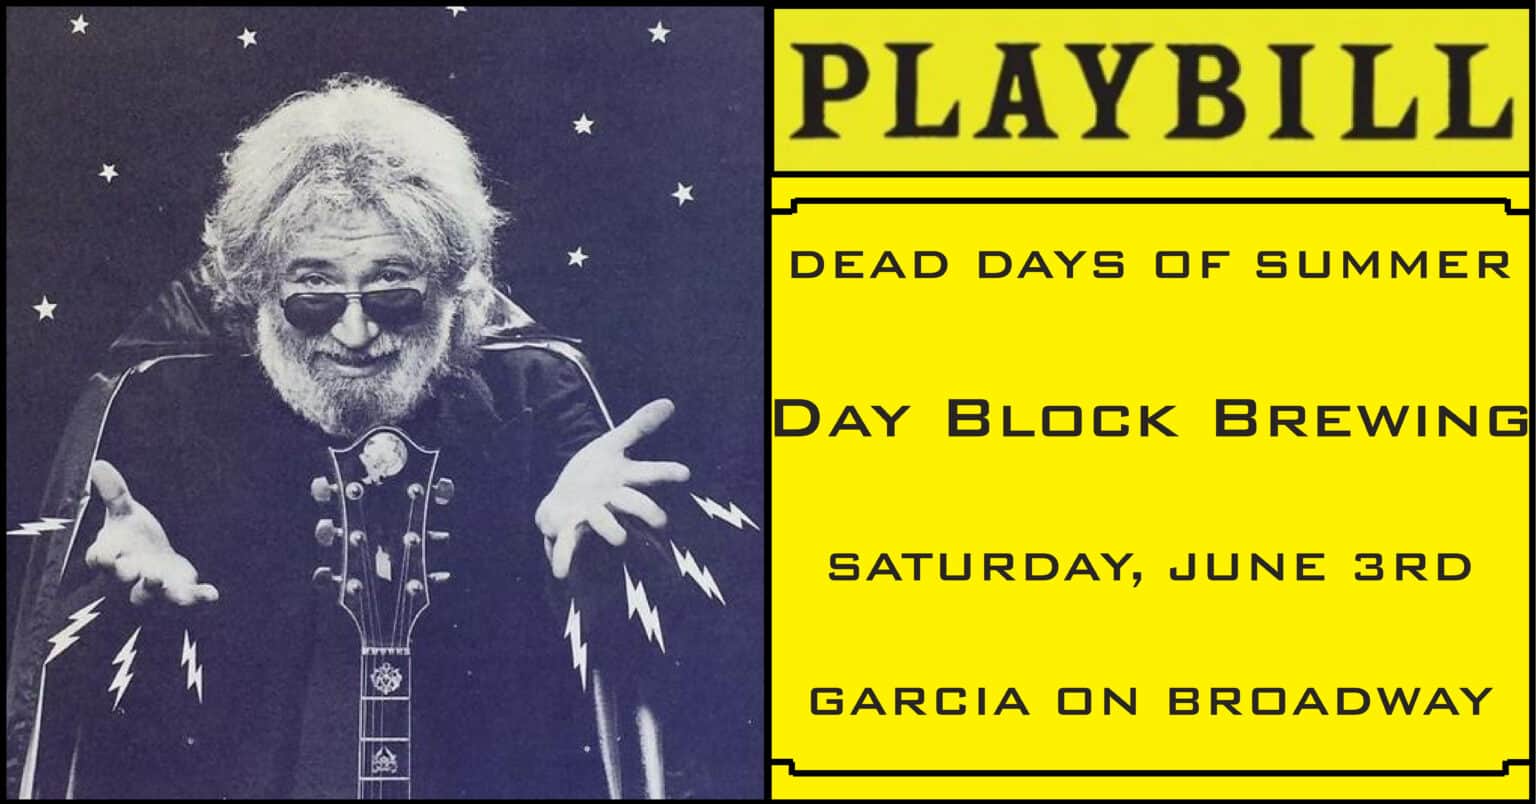 Dead Days of Summer - Garcia on Broadway